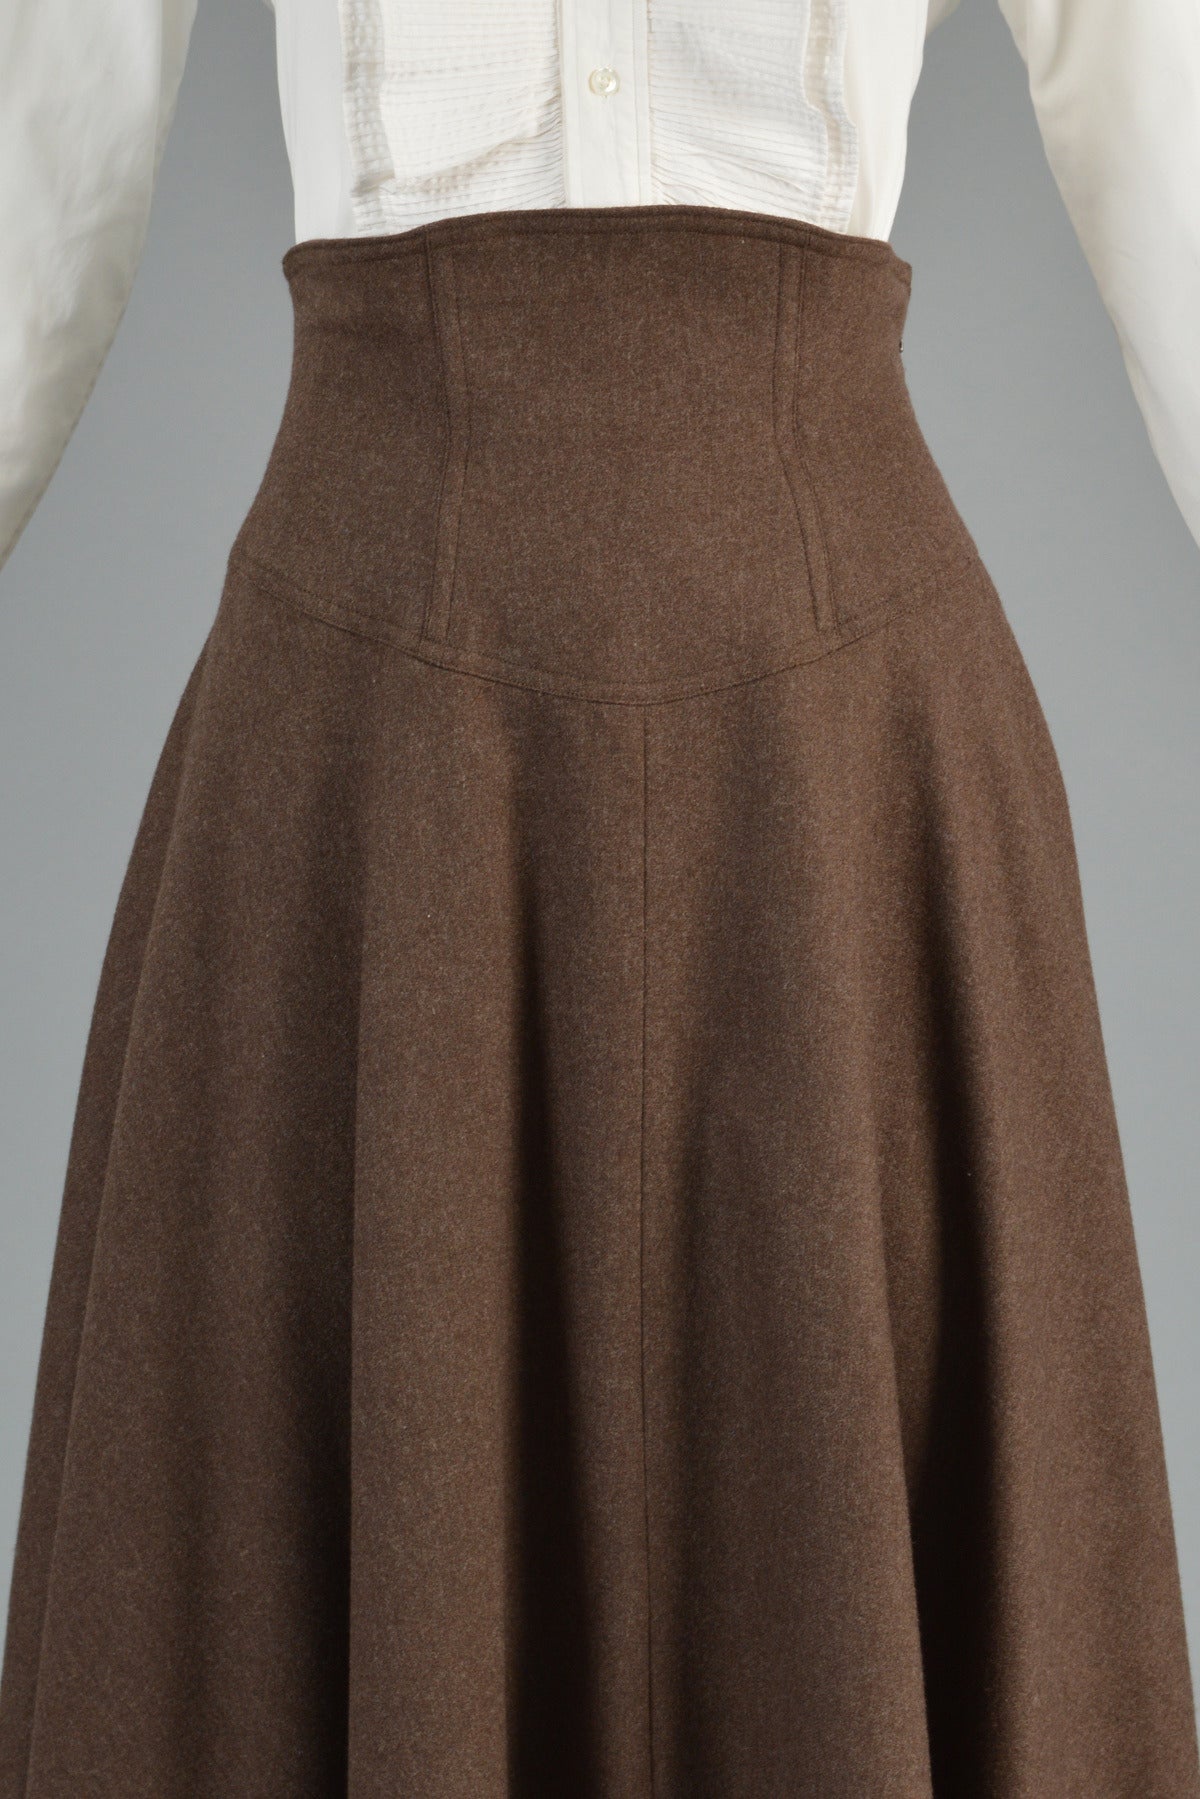 Women's 1970's Anne Klein Wool & Cashmere High Waisted Skirt